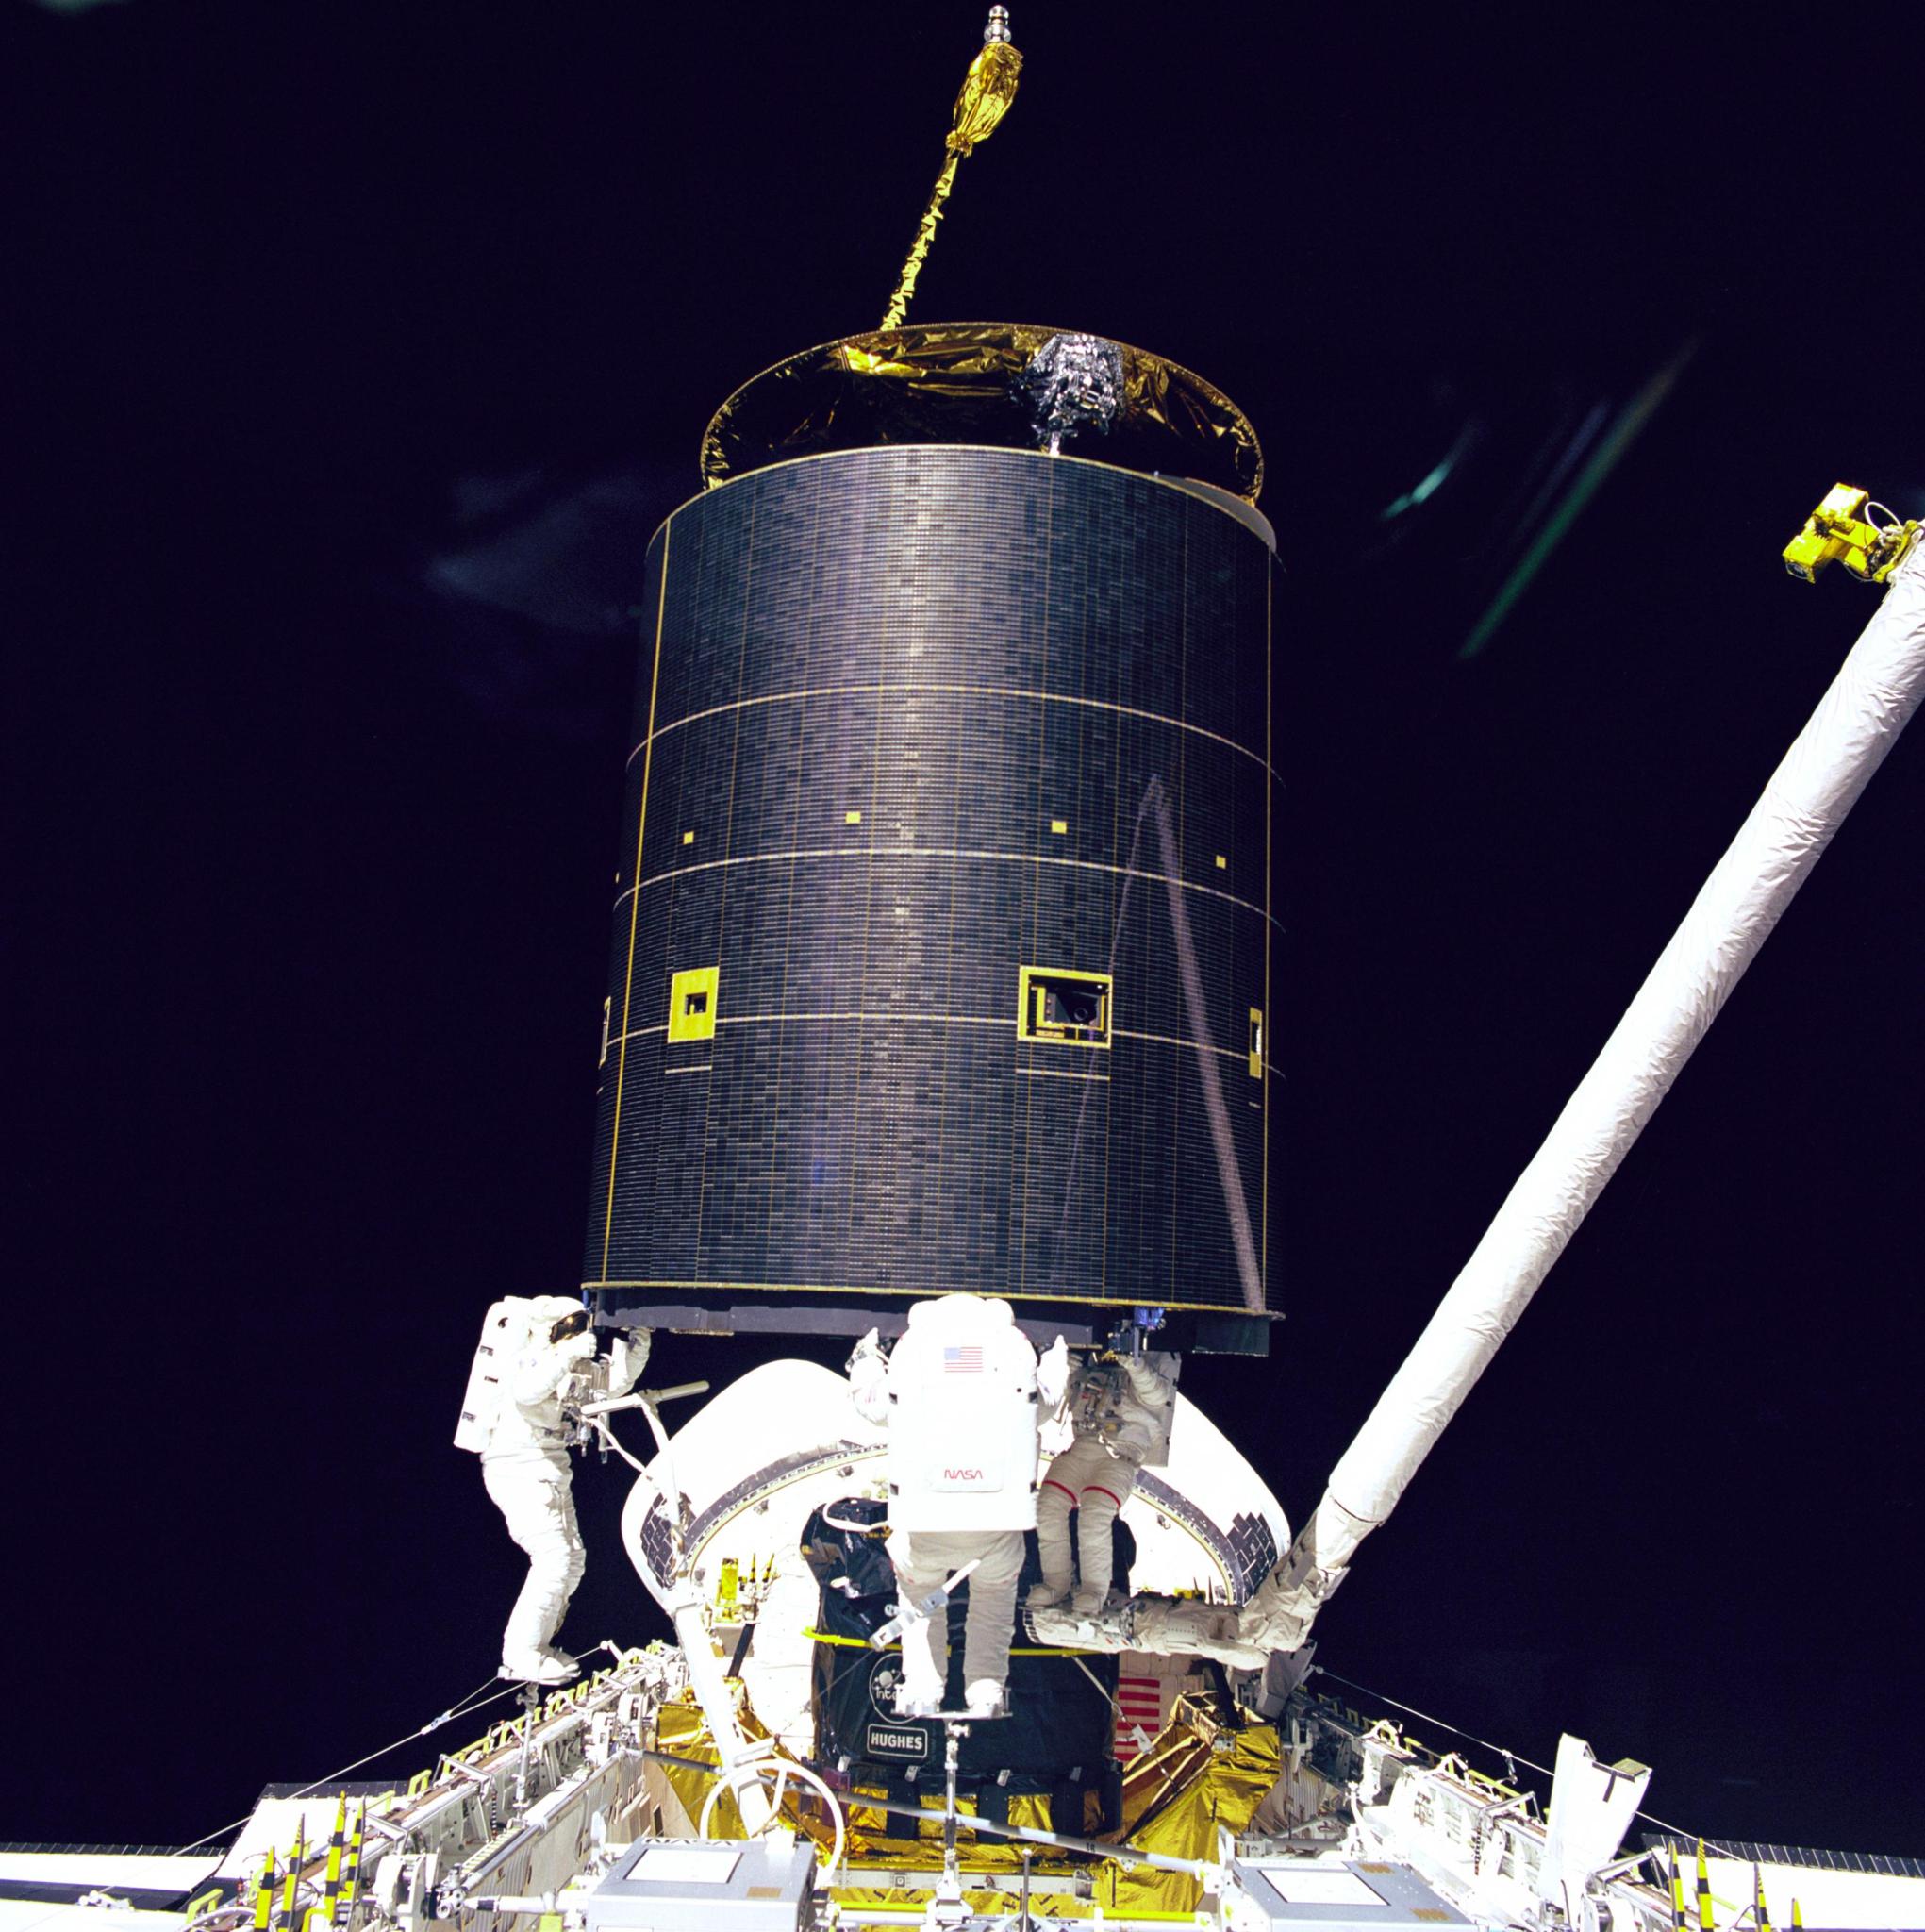 Spacewalking astronauts working on satellite